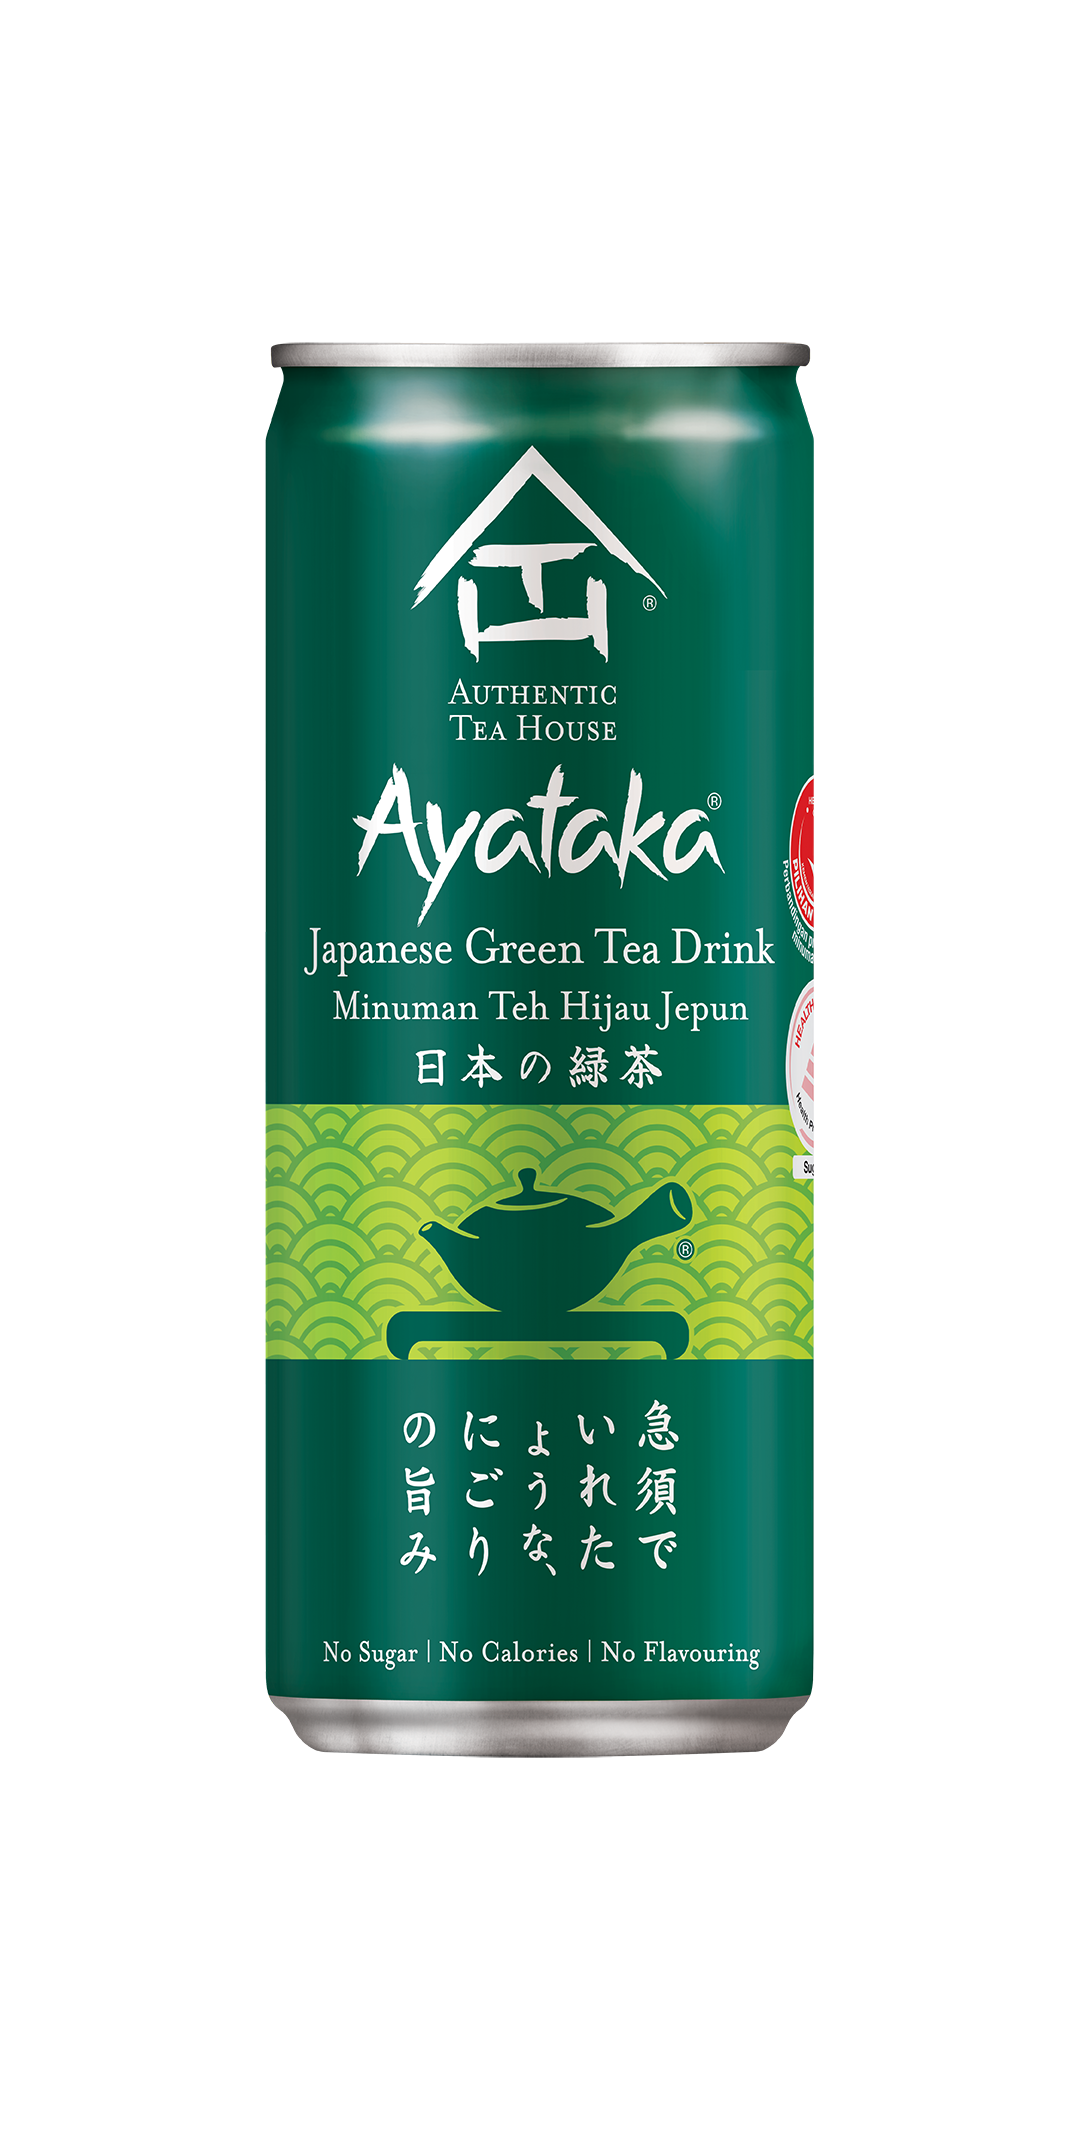 Authentic Tea House Ayataka Japanese Green Tea can